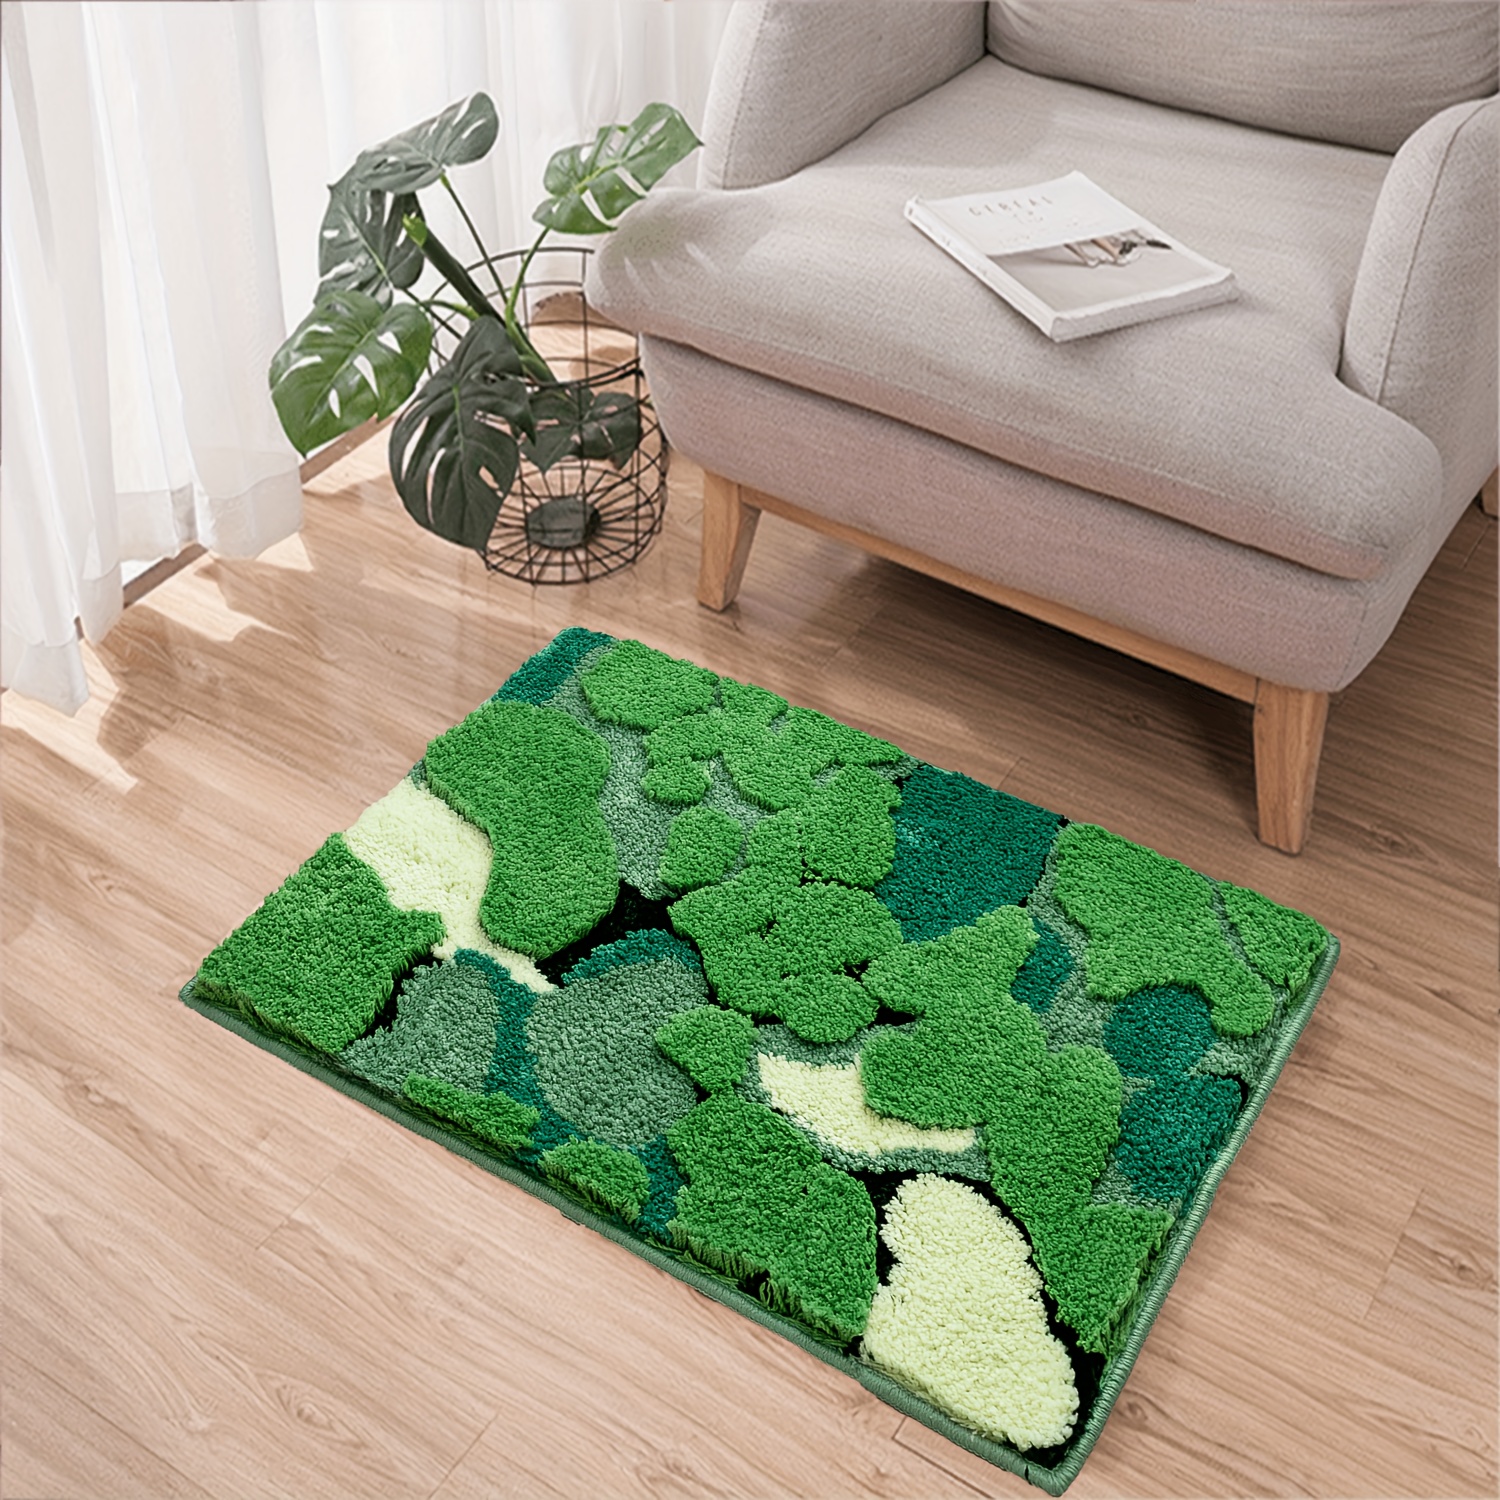 Green Leaf Bath Mats Absorbent Bathroom Rug Carpet Non-slip Floor